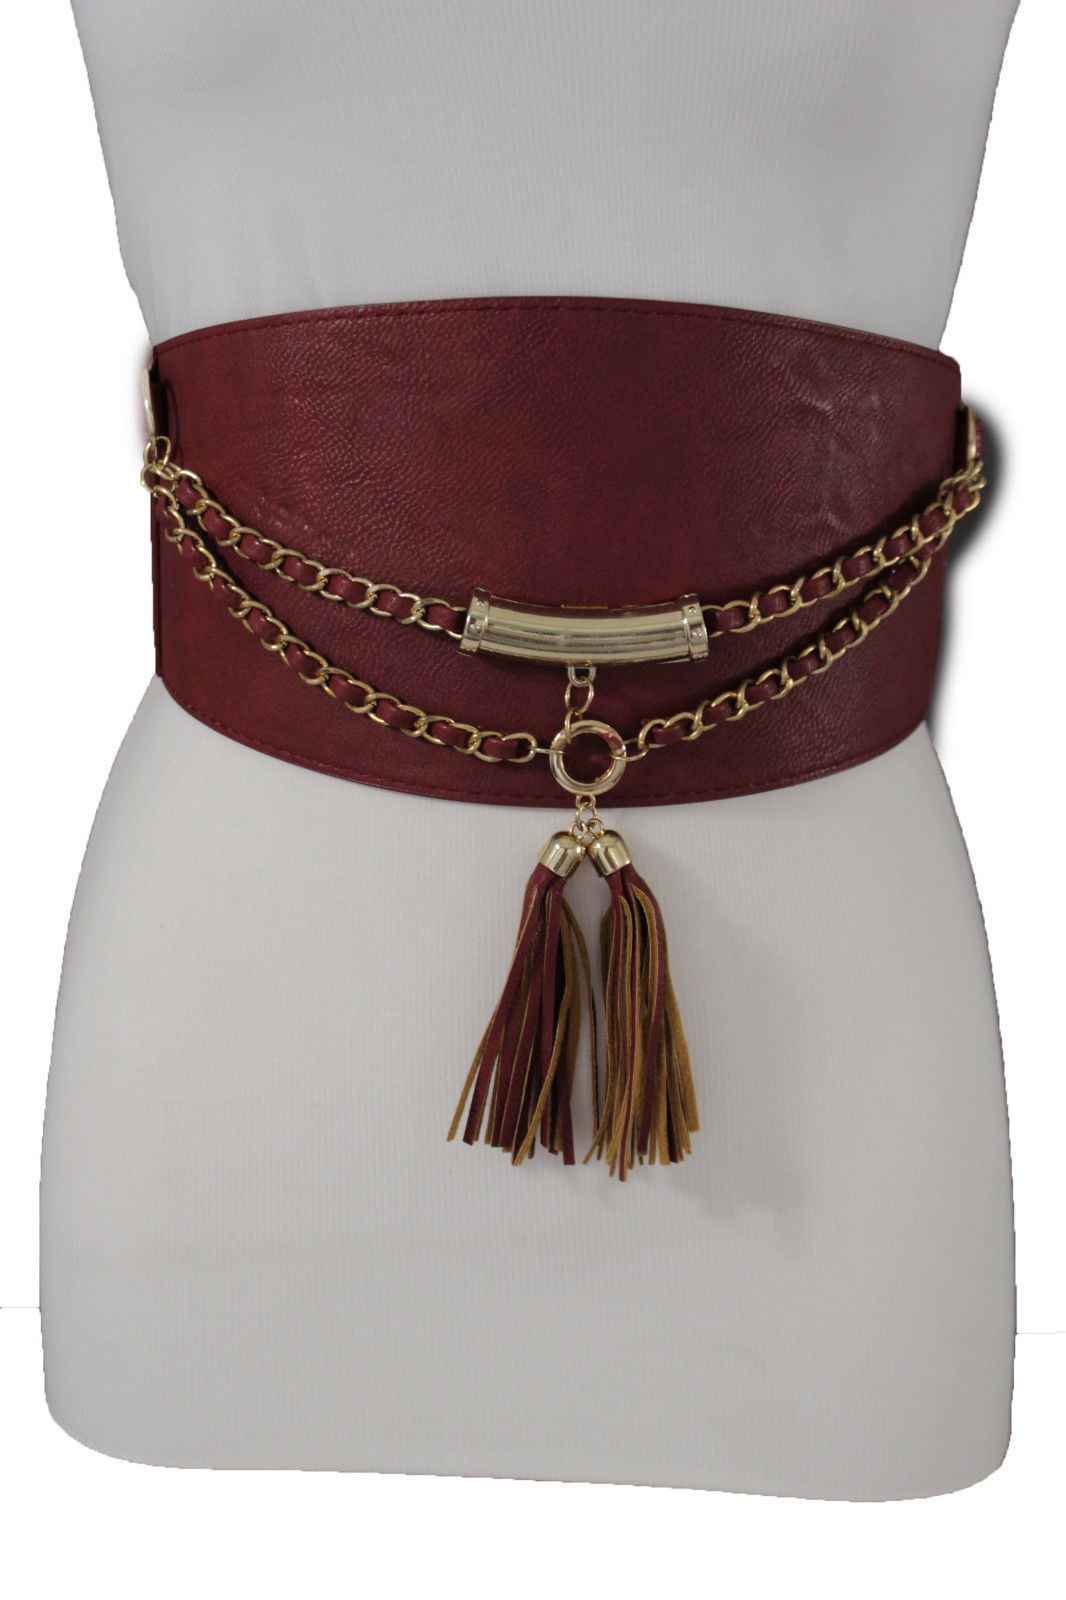 New Women Hip High Waist Gold Metal Chain Wide Fashion Corset Belt Red Color S M - Belts